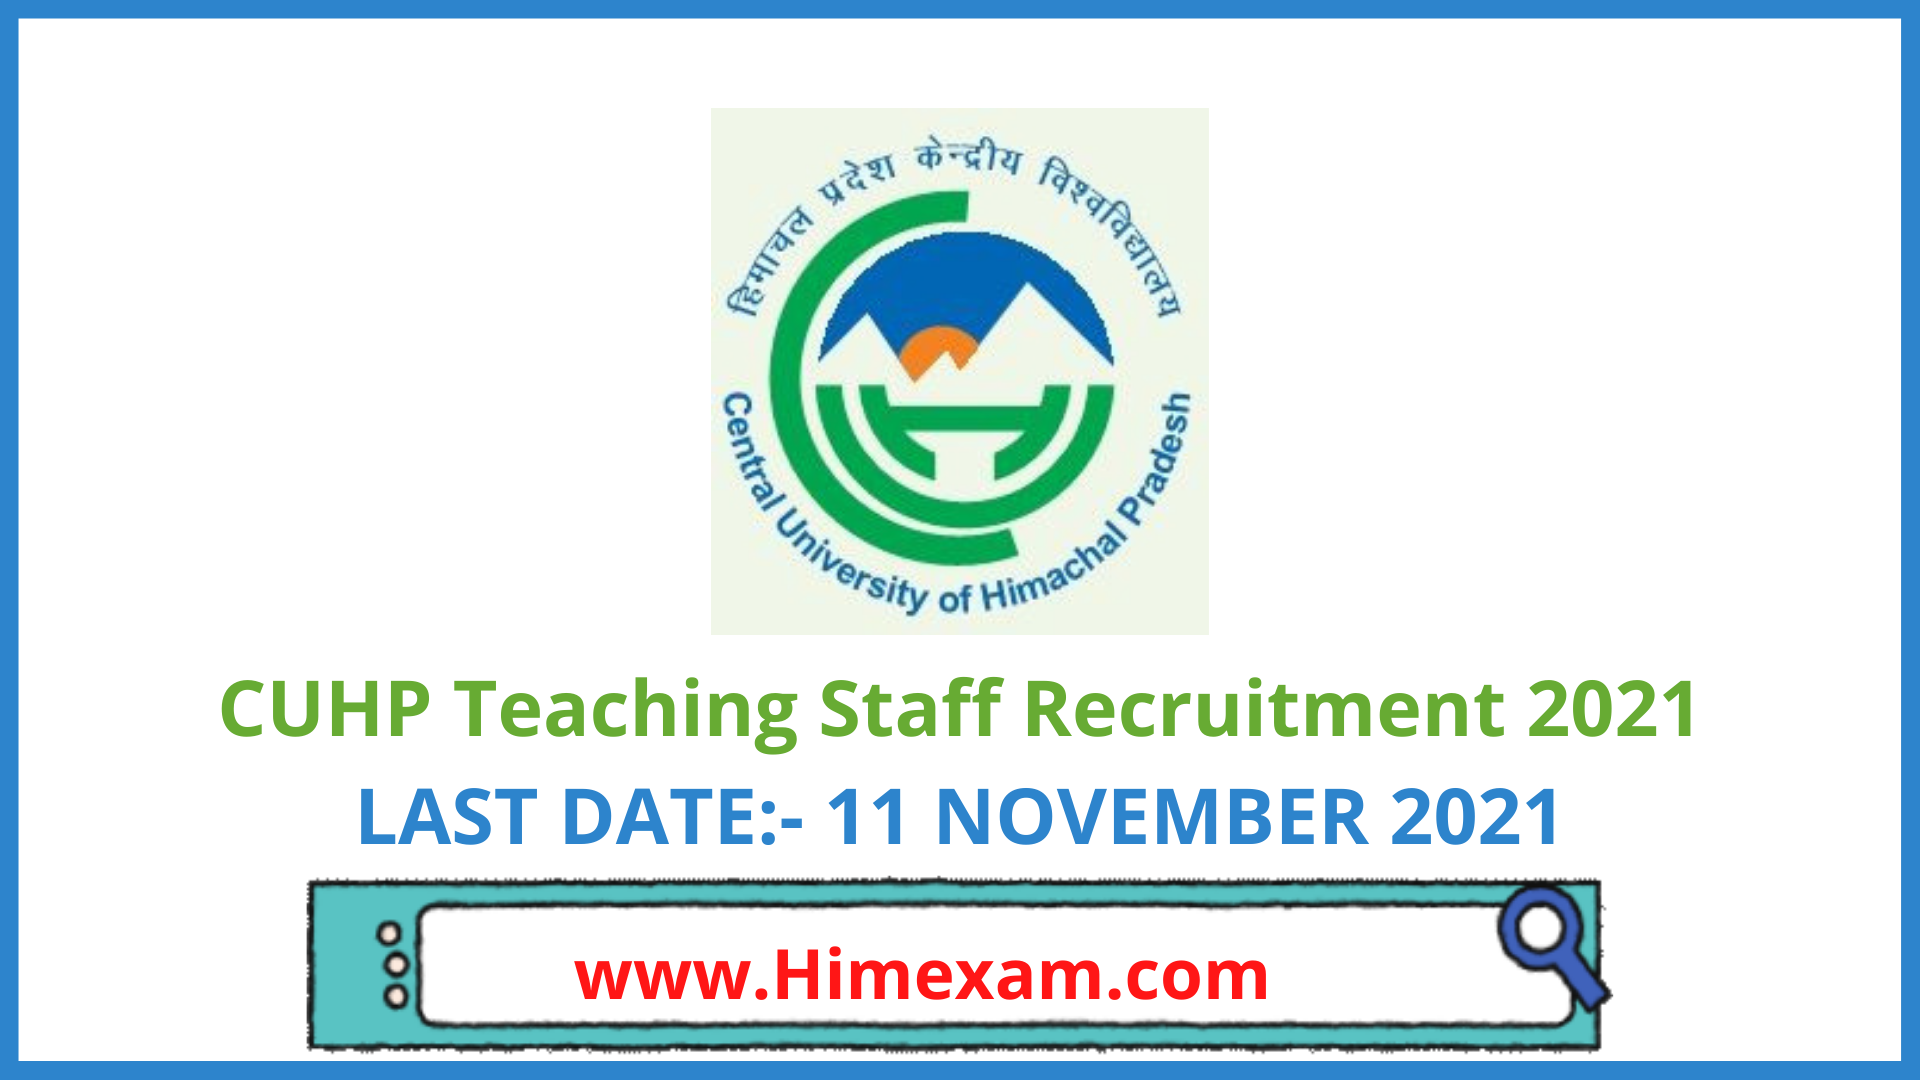 CUHP Teaching Staff Recruitment 2021